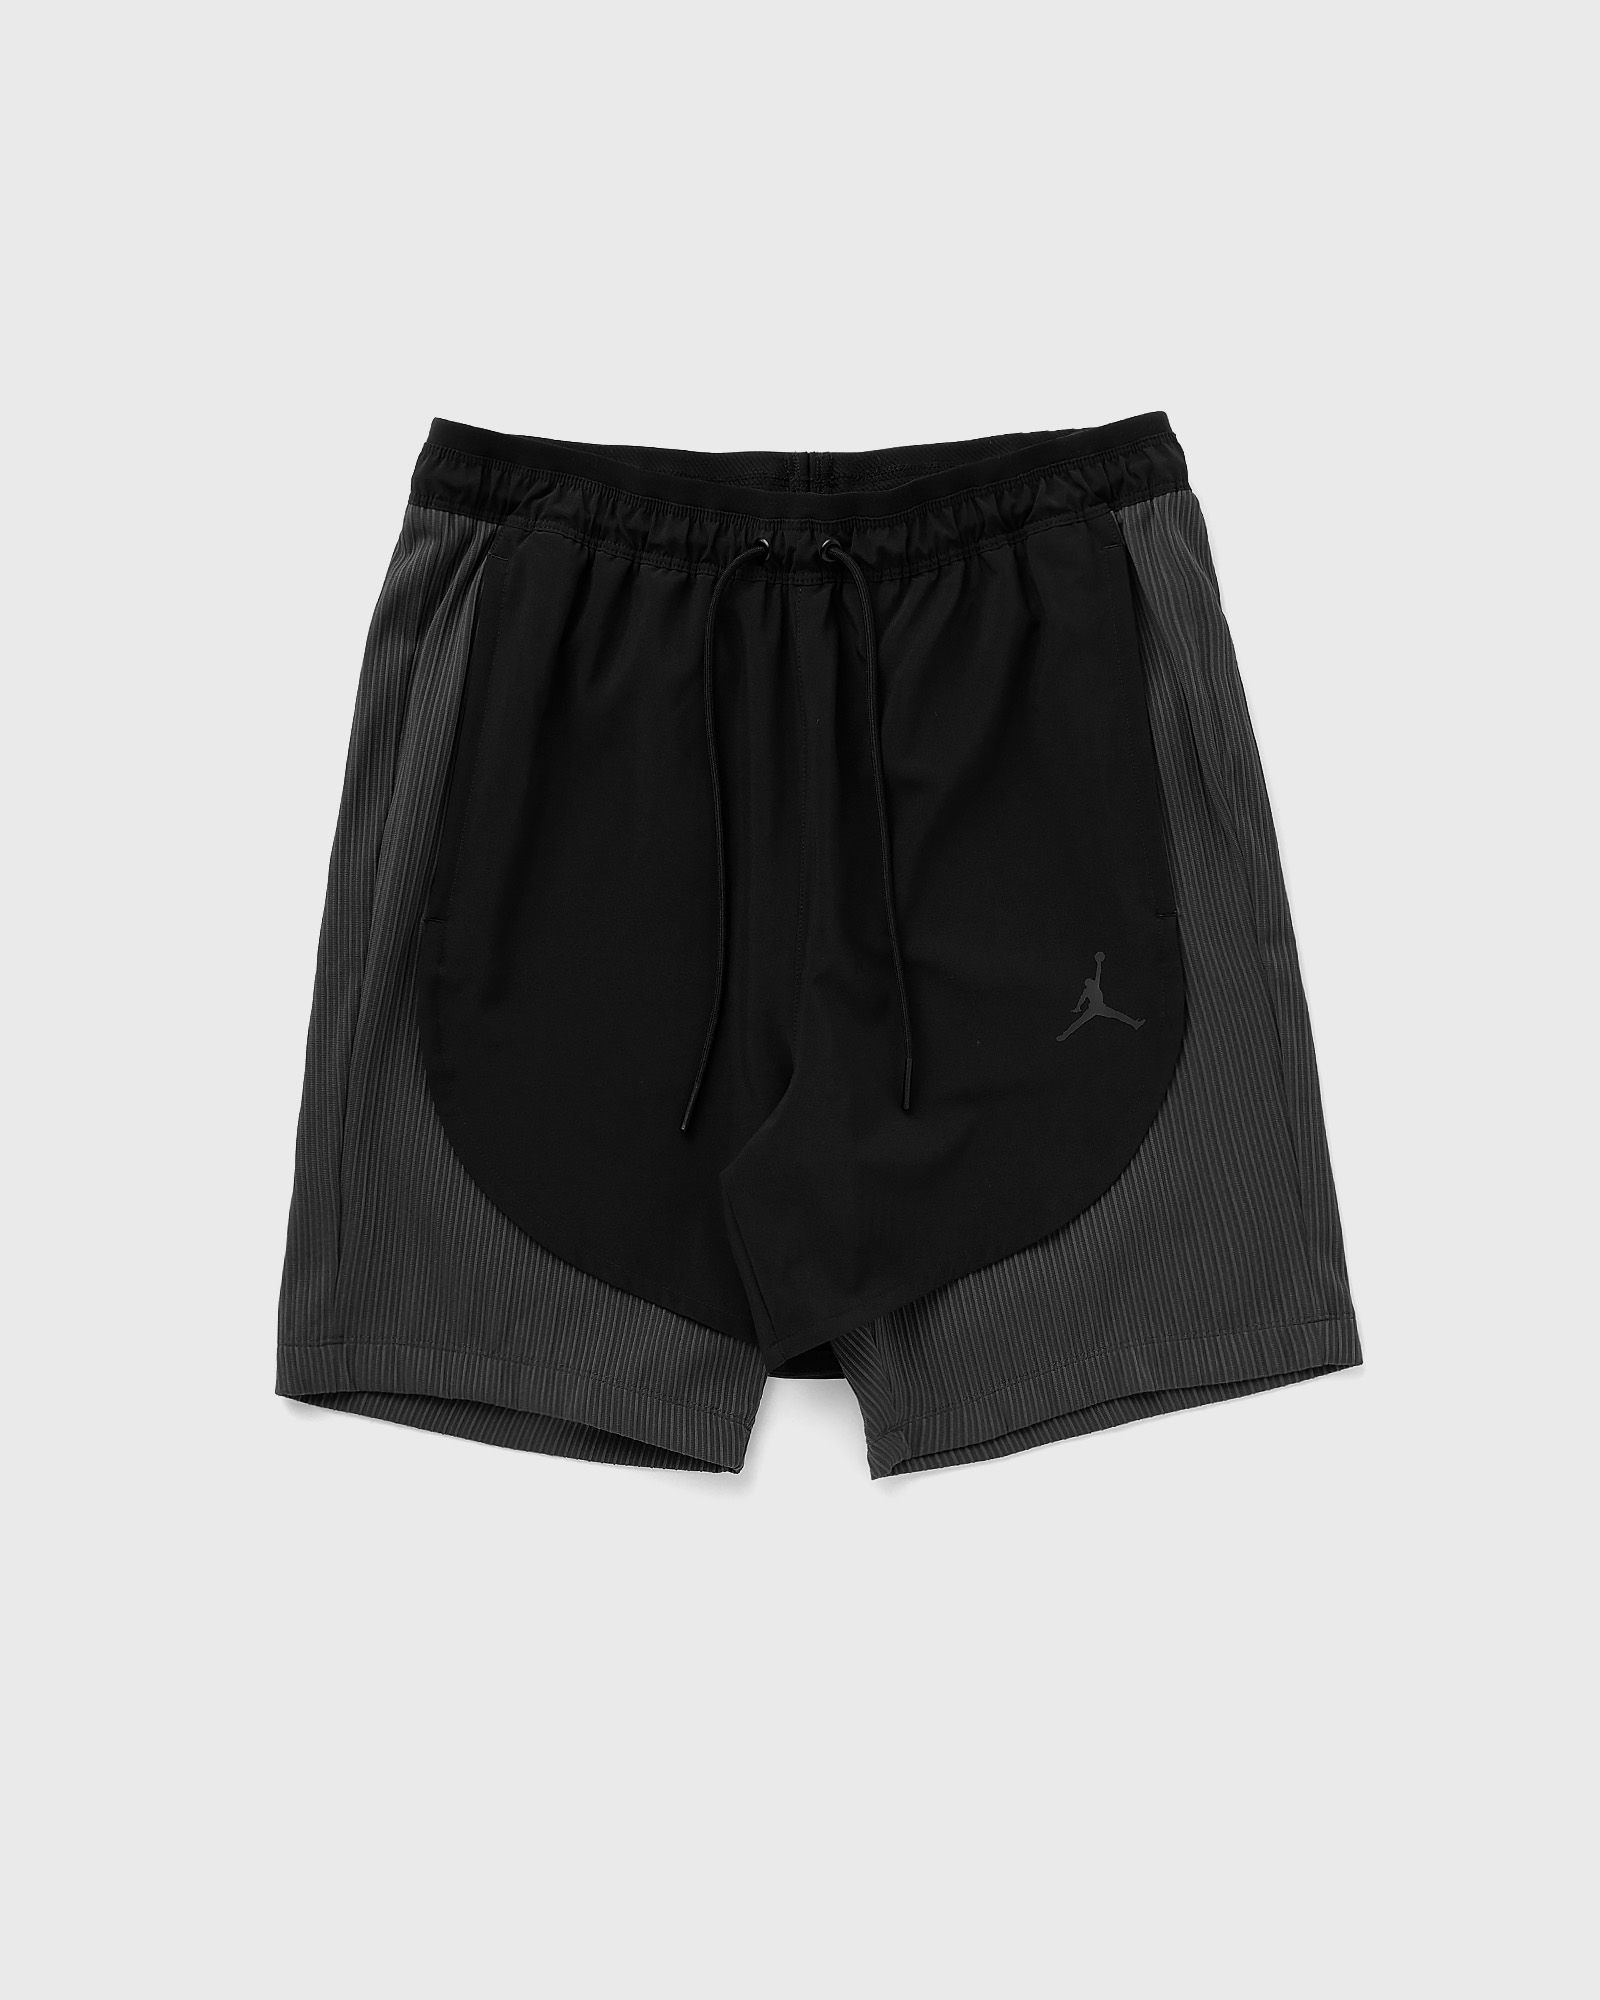 Jordan - dri-fit sport shorts men sport & team shorts black in größe:xl